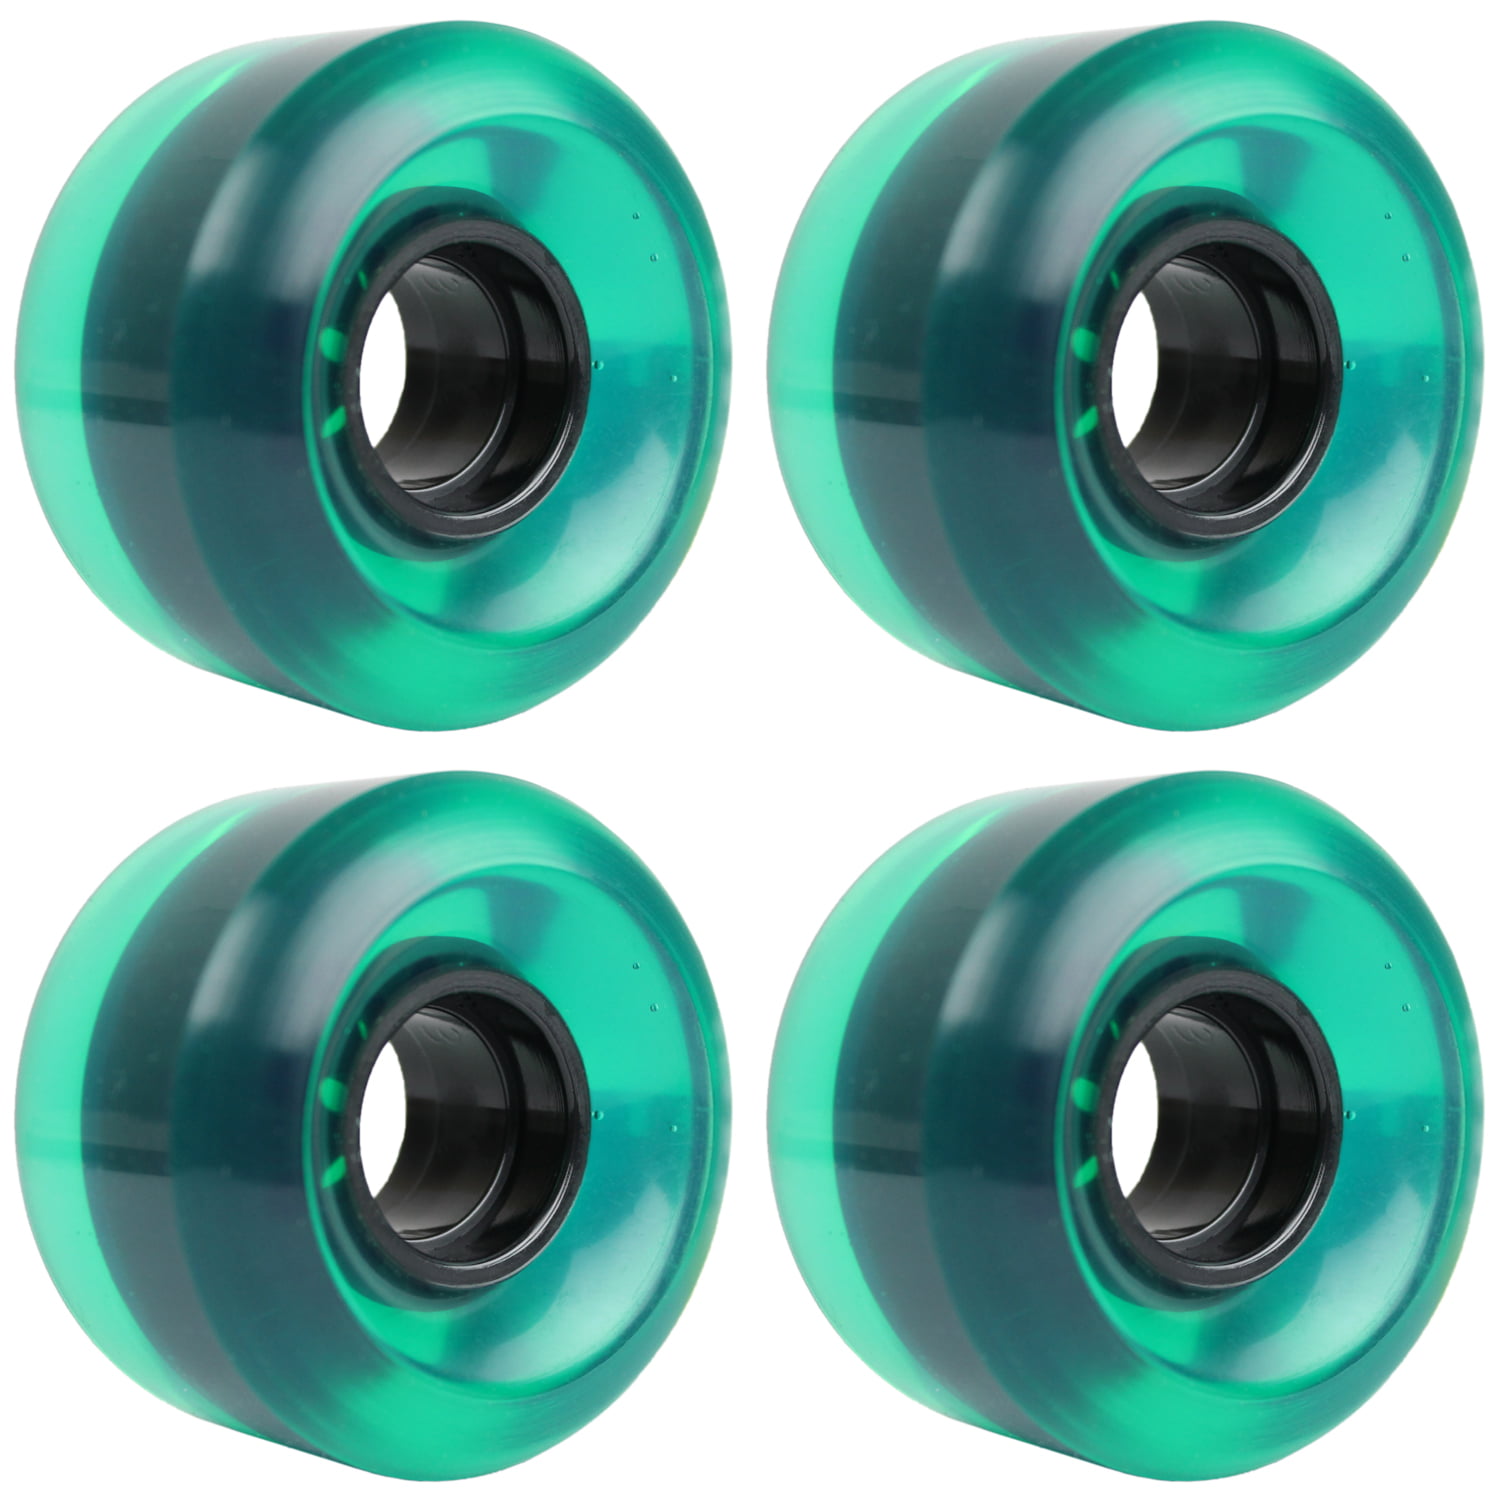 Small skateboard wheels